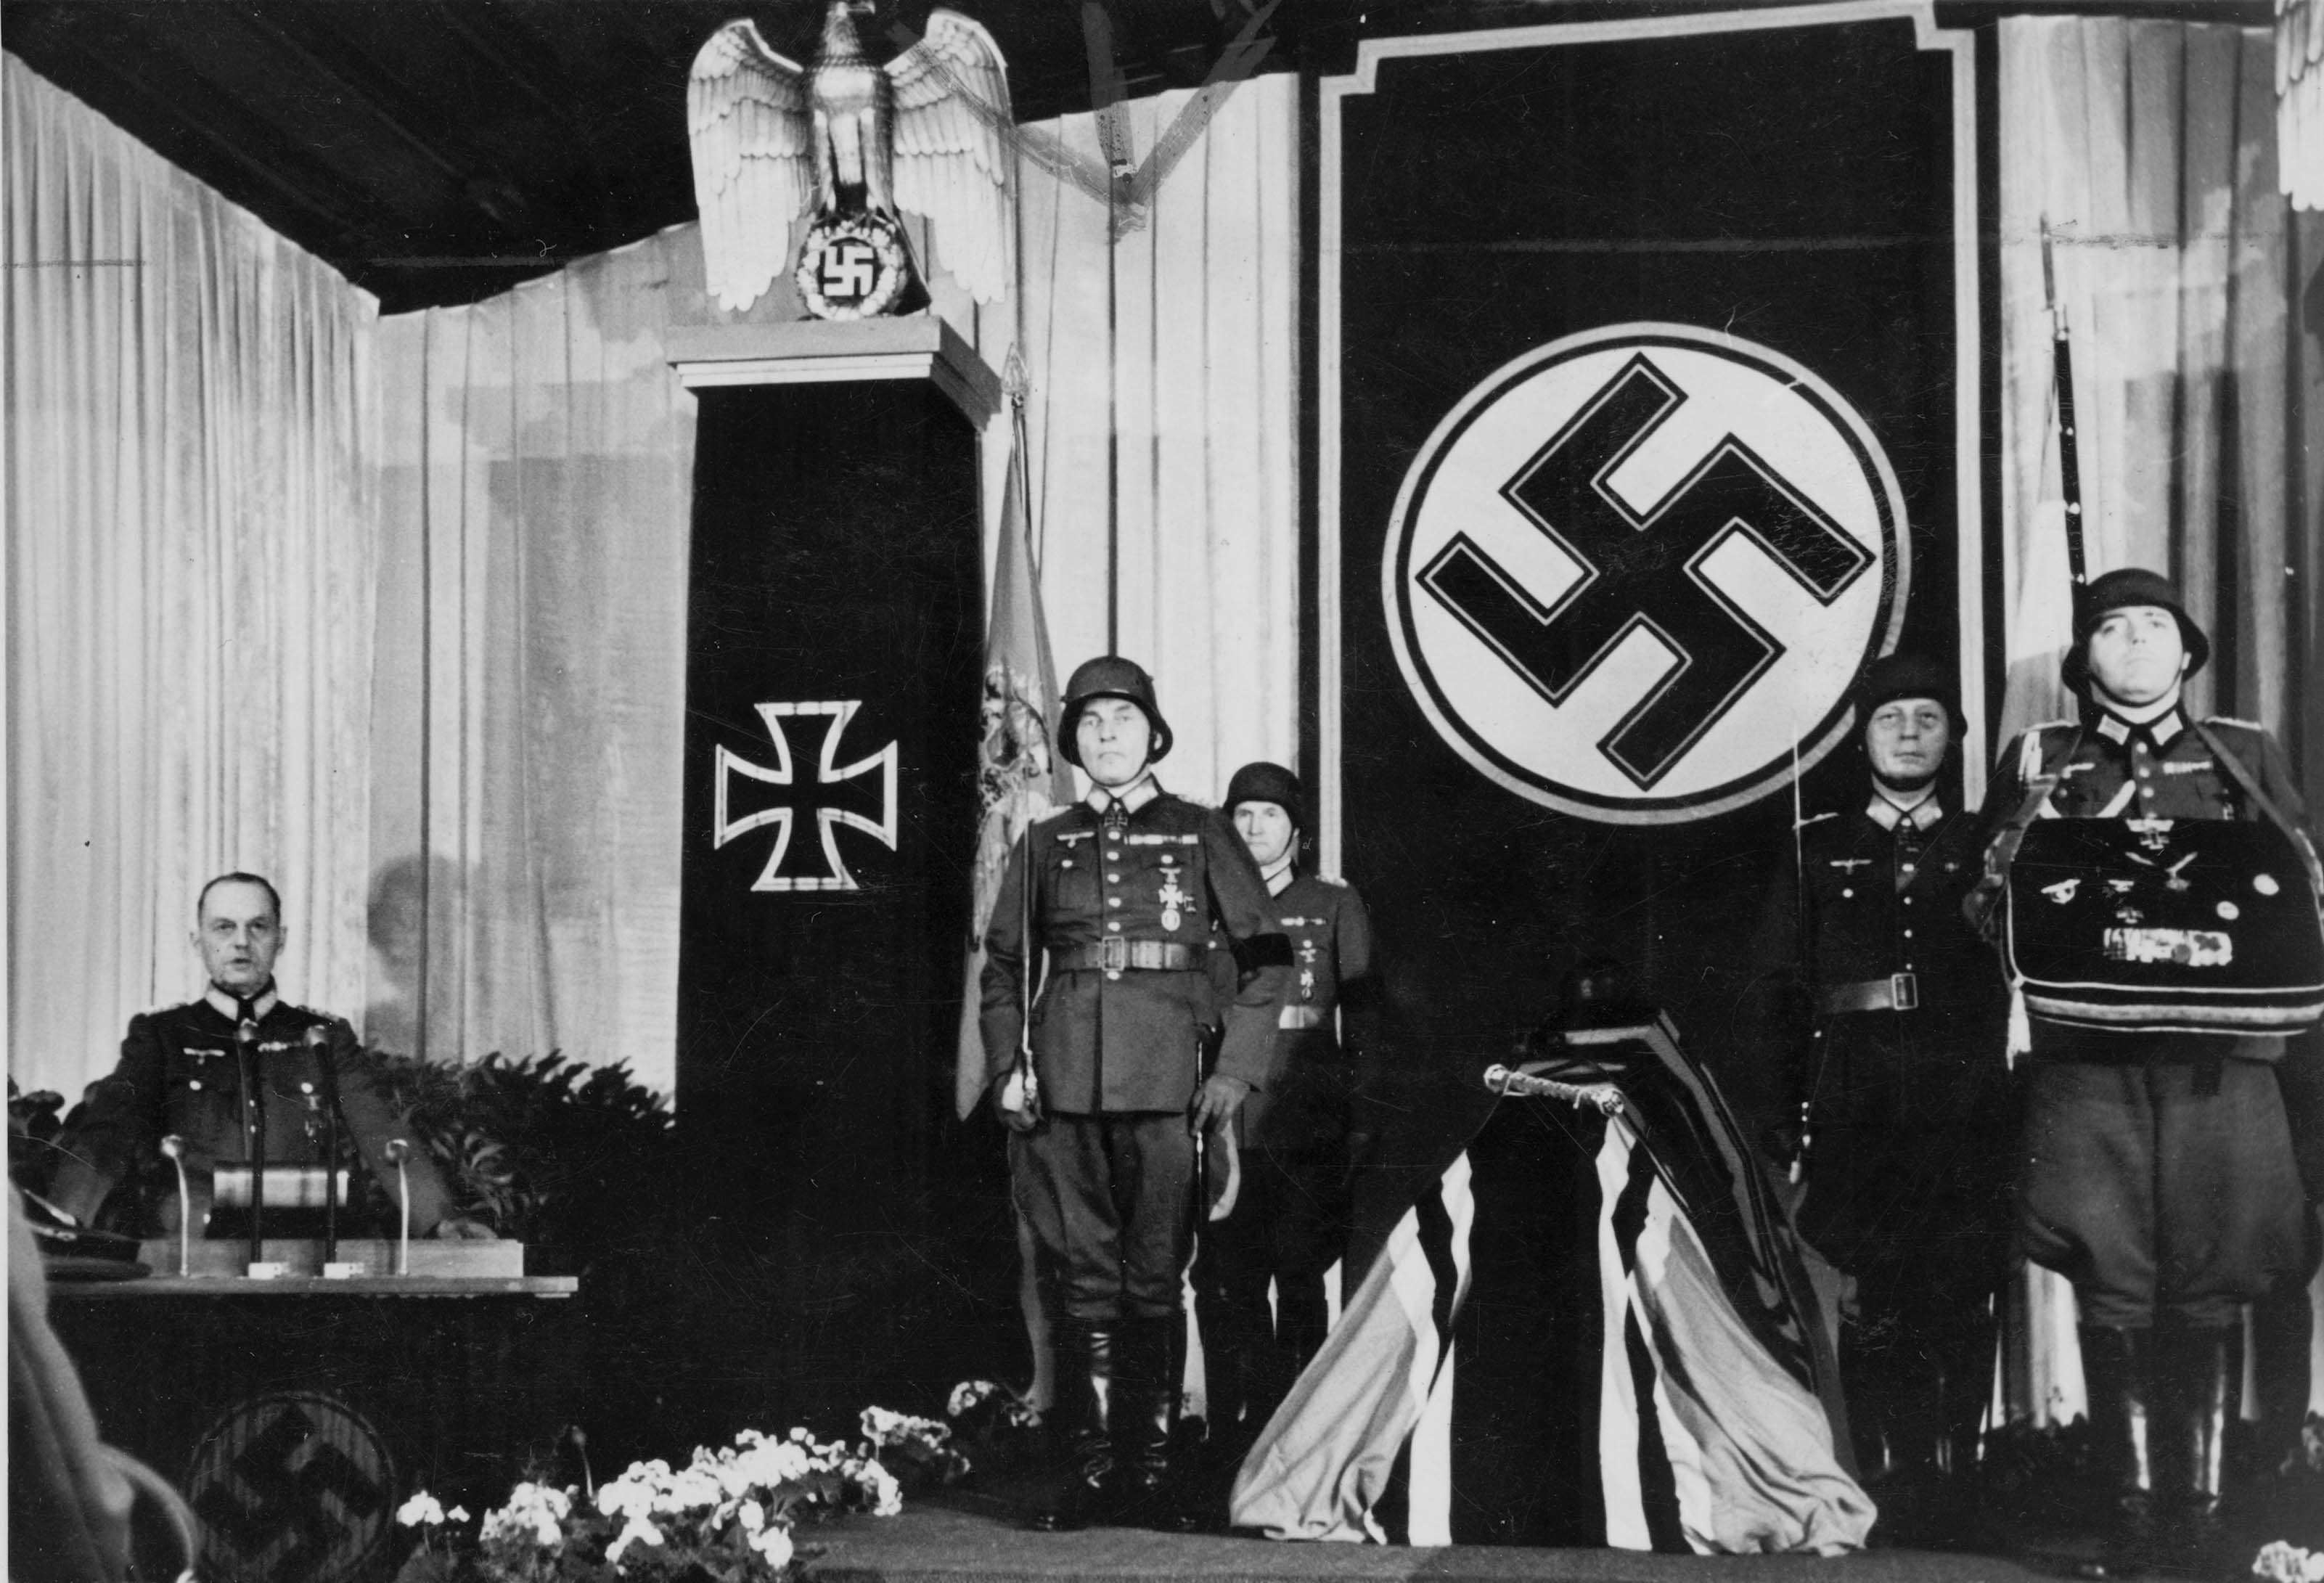 Field Marshal Gerd von Rundstedt (left) delivers a promotional speech for Hitler as Rommel's eulogy at his funeral in 1944. Photo courtesy of Haus der Geschichte Baden-Württemberg